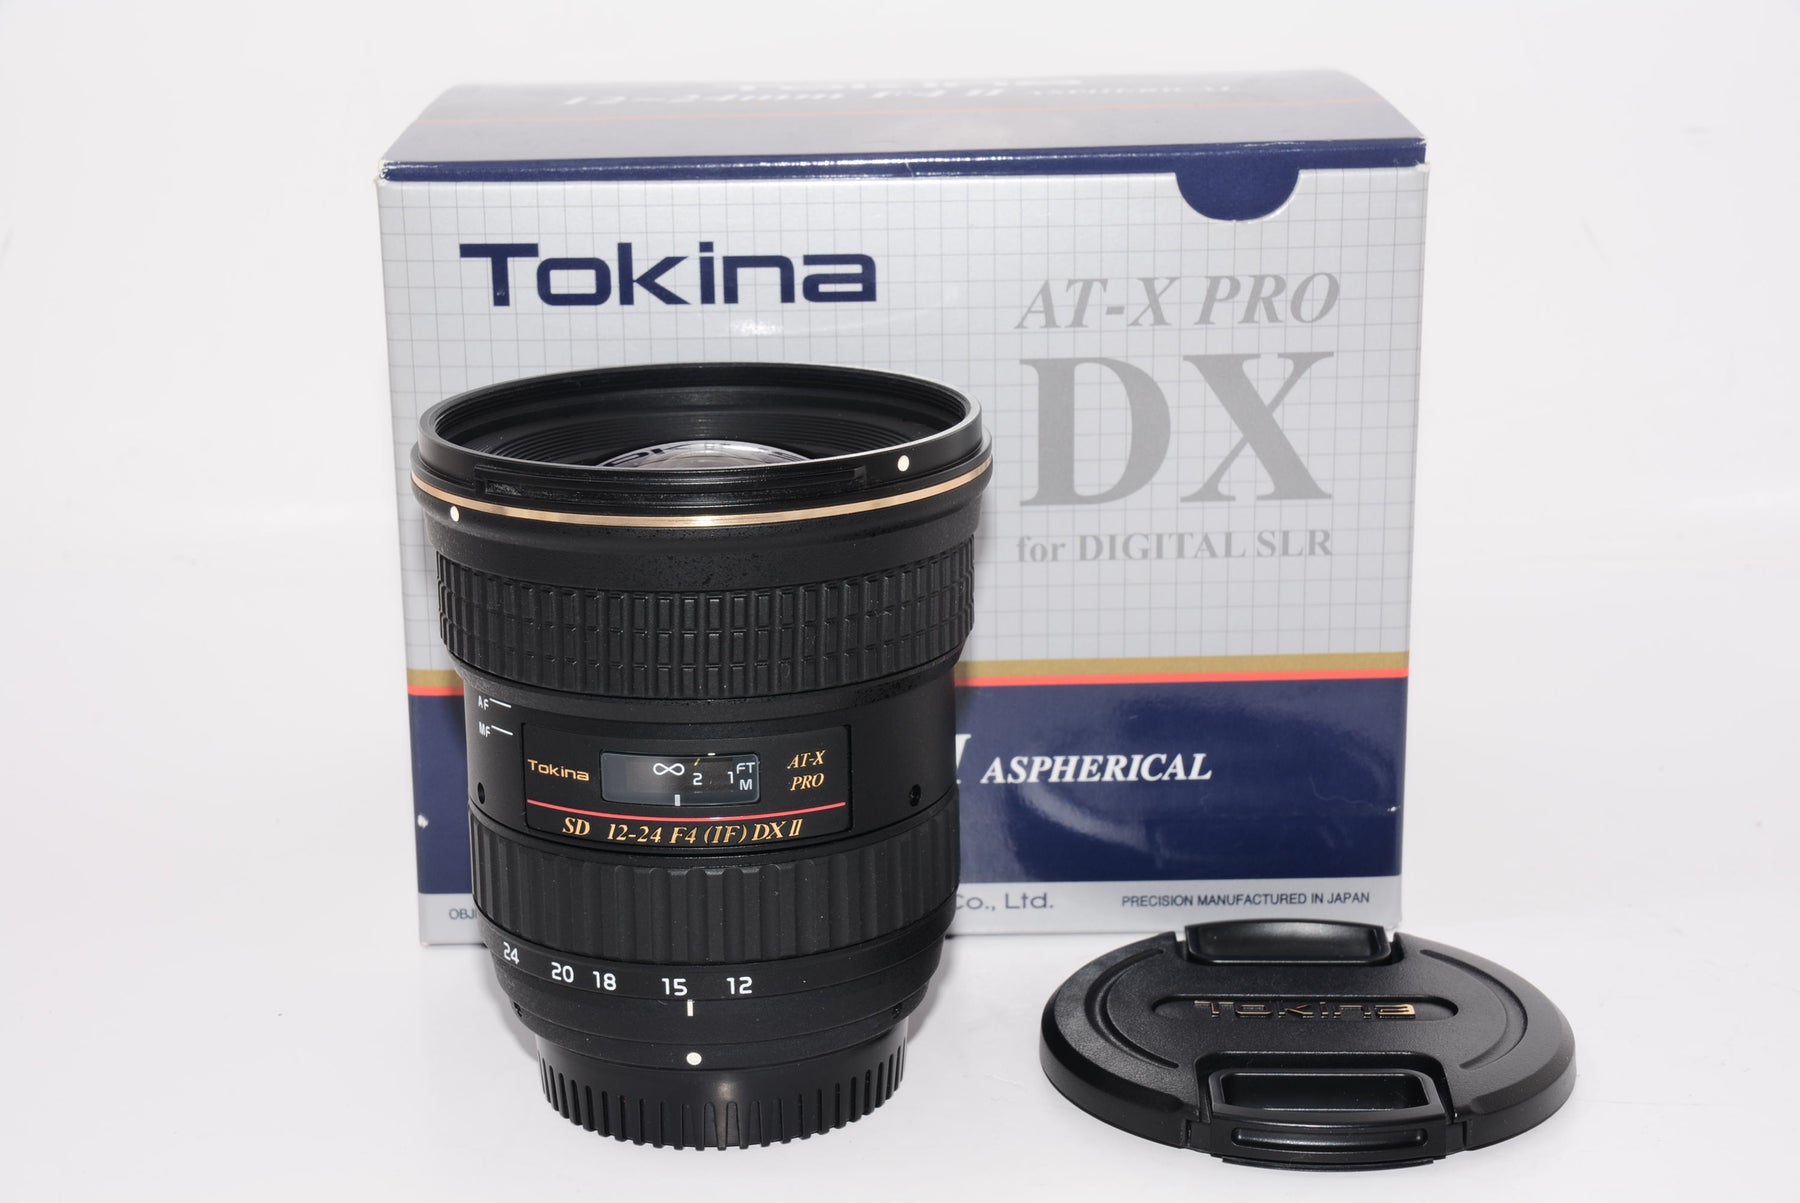 Tokina 超広角ズームレンズ AT-X 124 PRO DX II 12-24mm F4 (IS) ASPHERICAL ニコン用 APS-C対応 